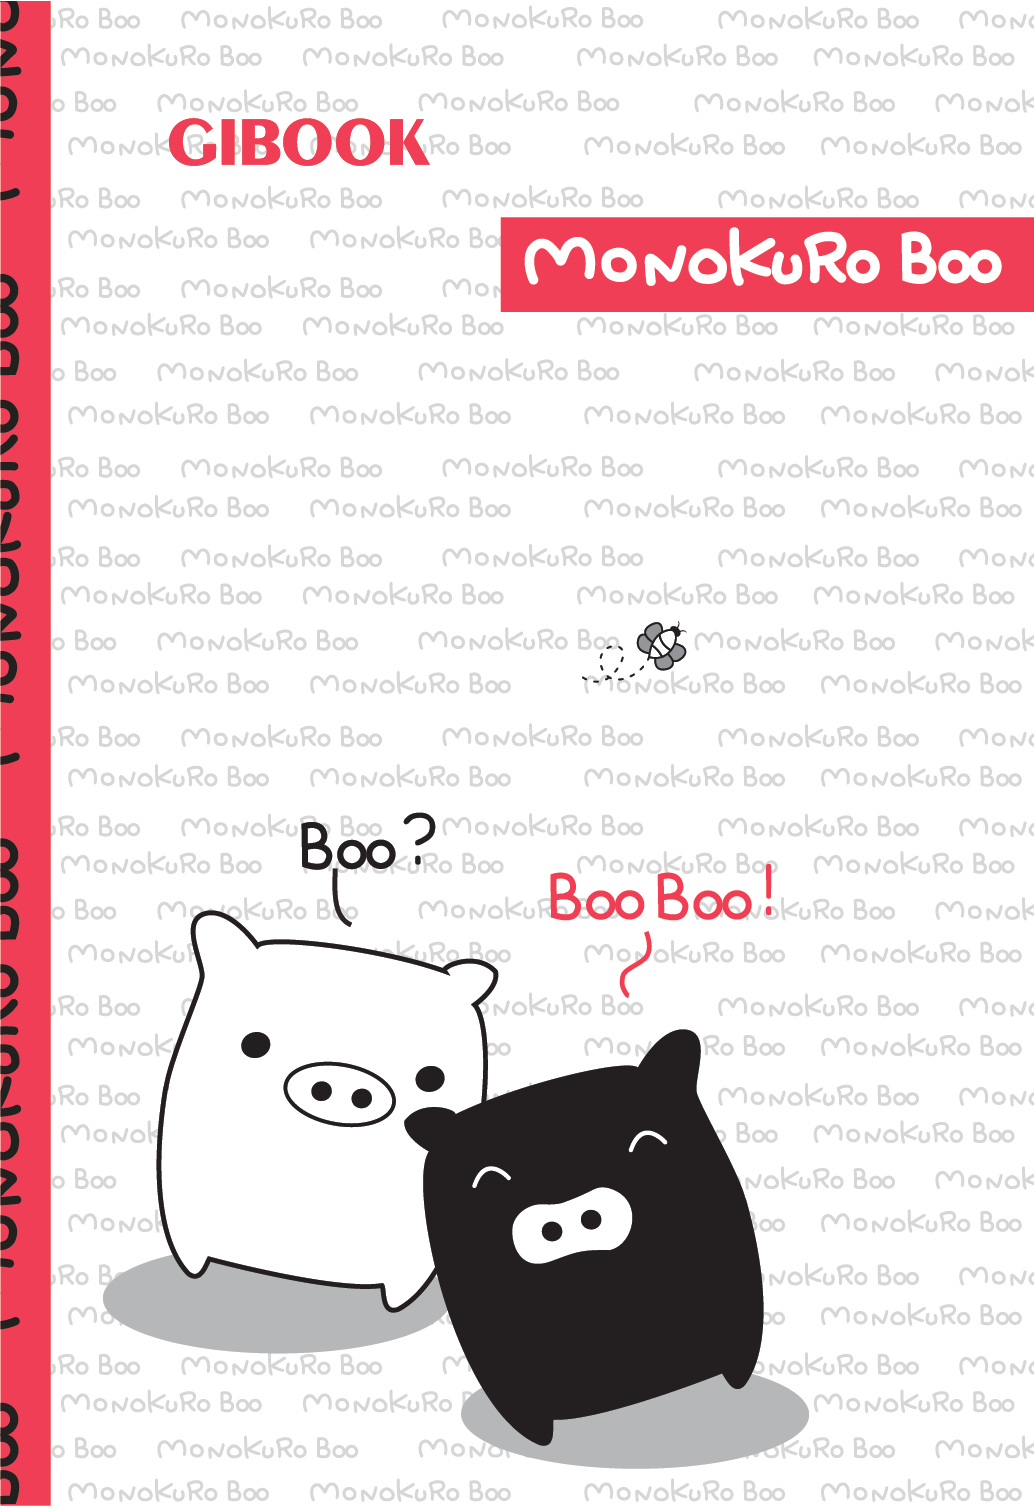 Monokuro Boo